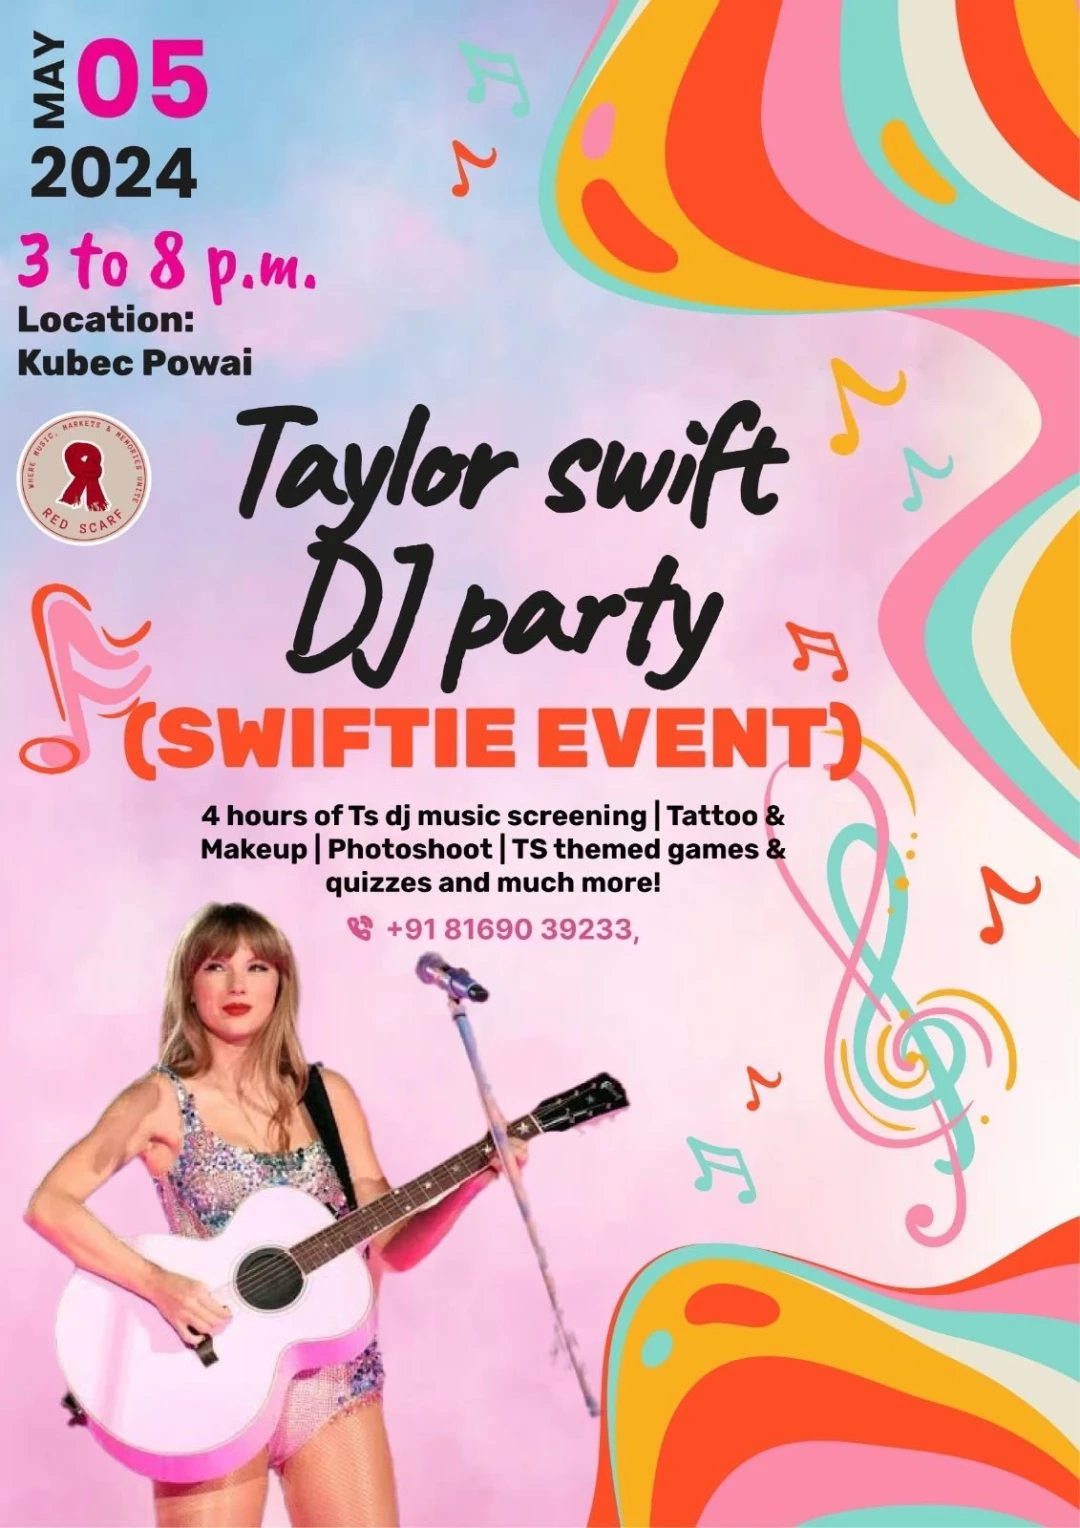 Mumbai Gets Ready for Taylor Swift DJ Party – Tktby